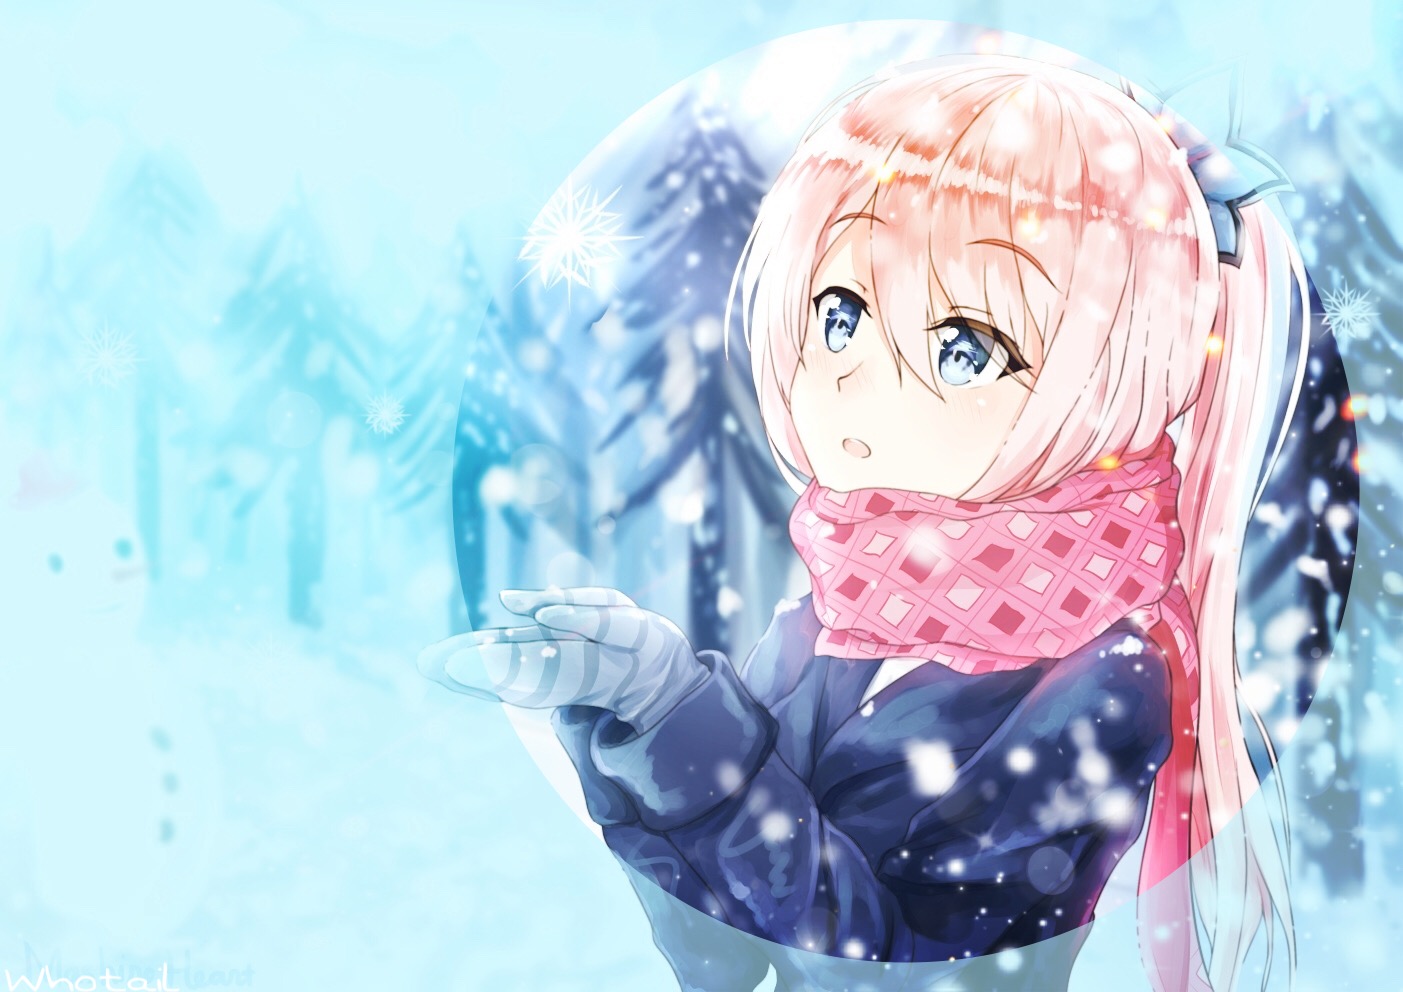 Winter Anime Girl Pfp